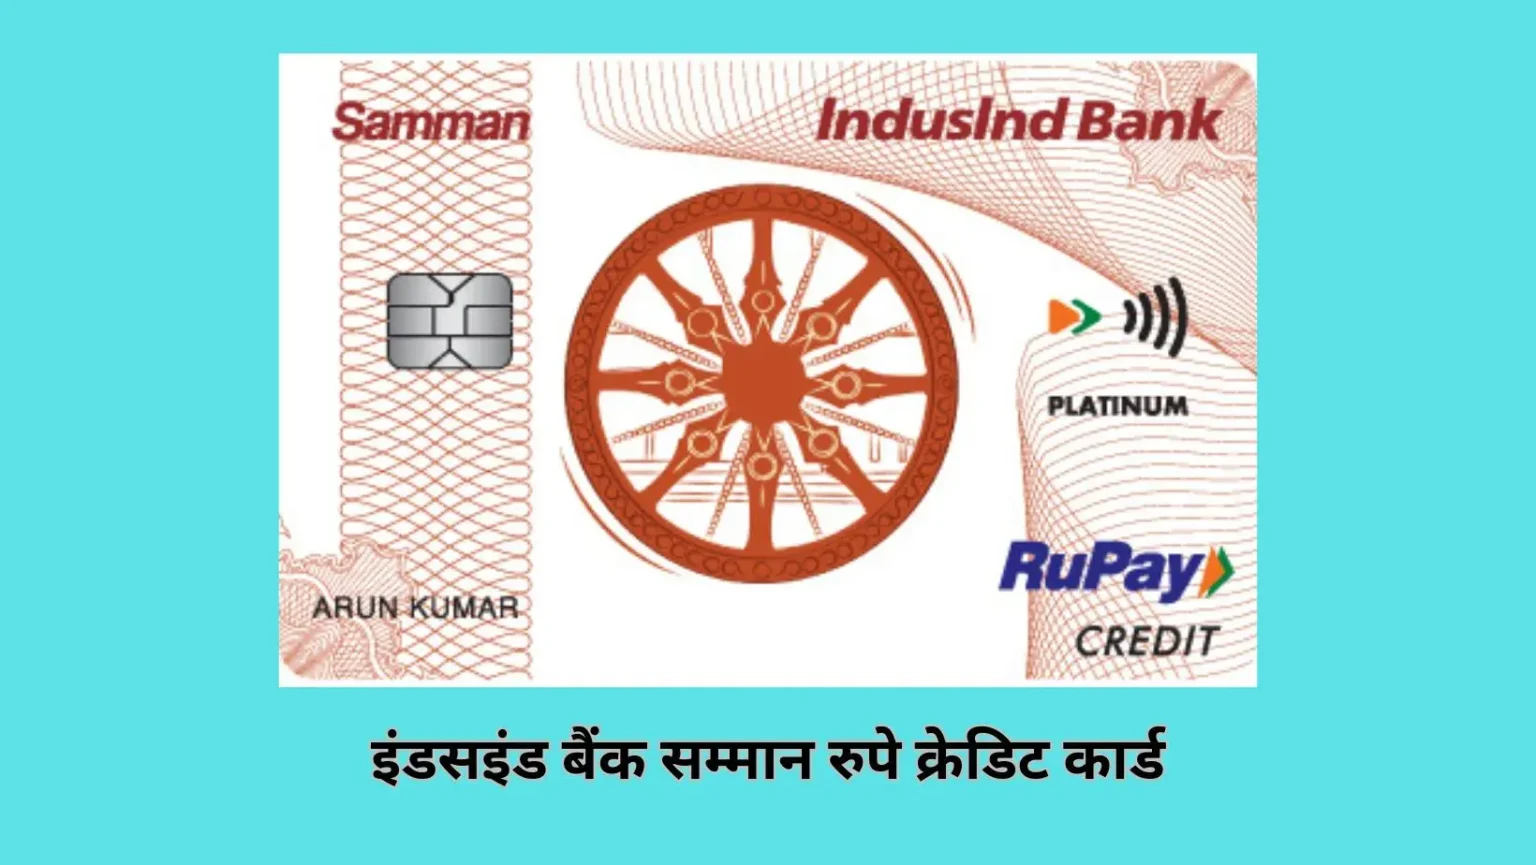 IndusInd Bank Samman RuPay Credit Card